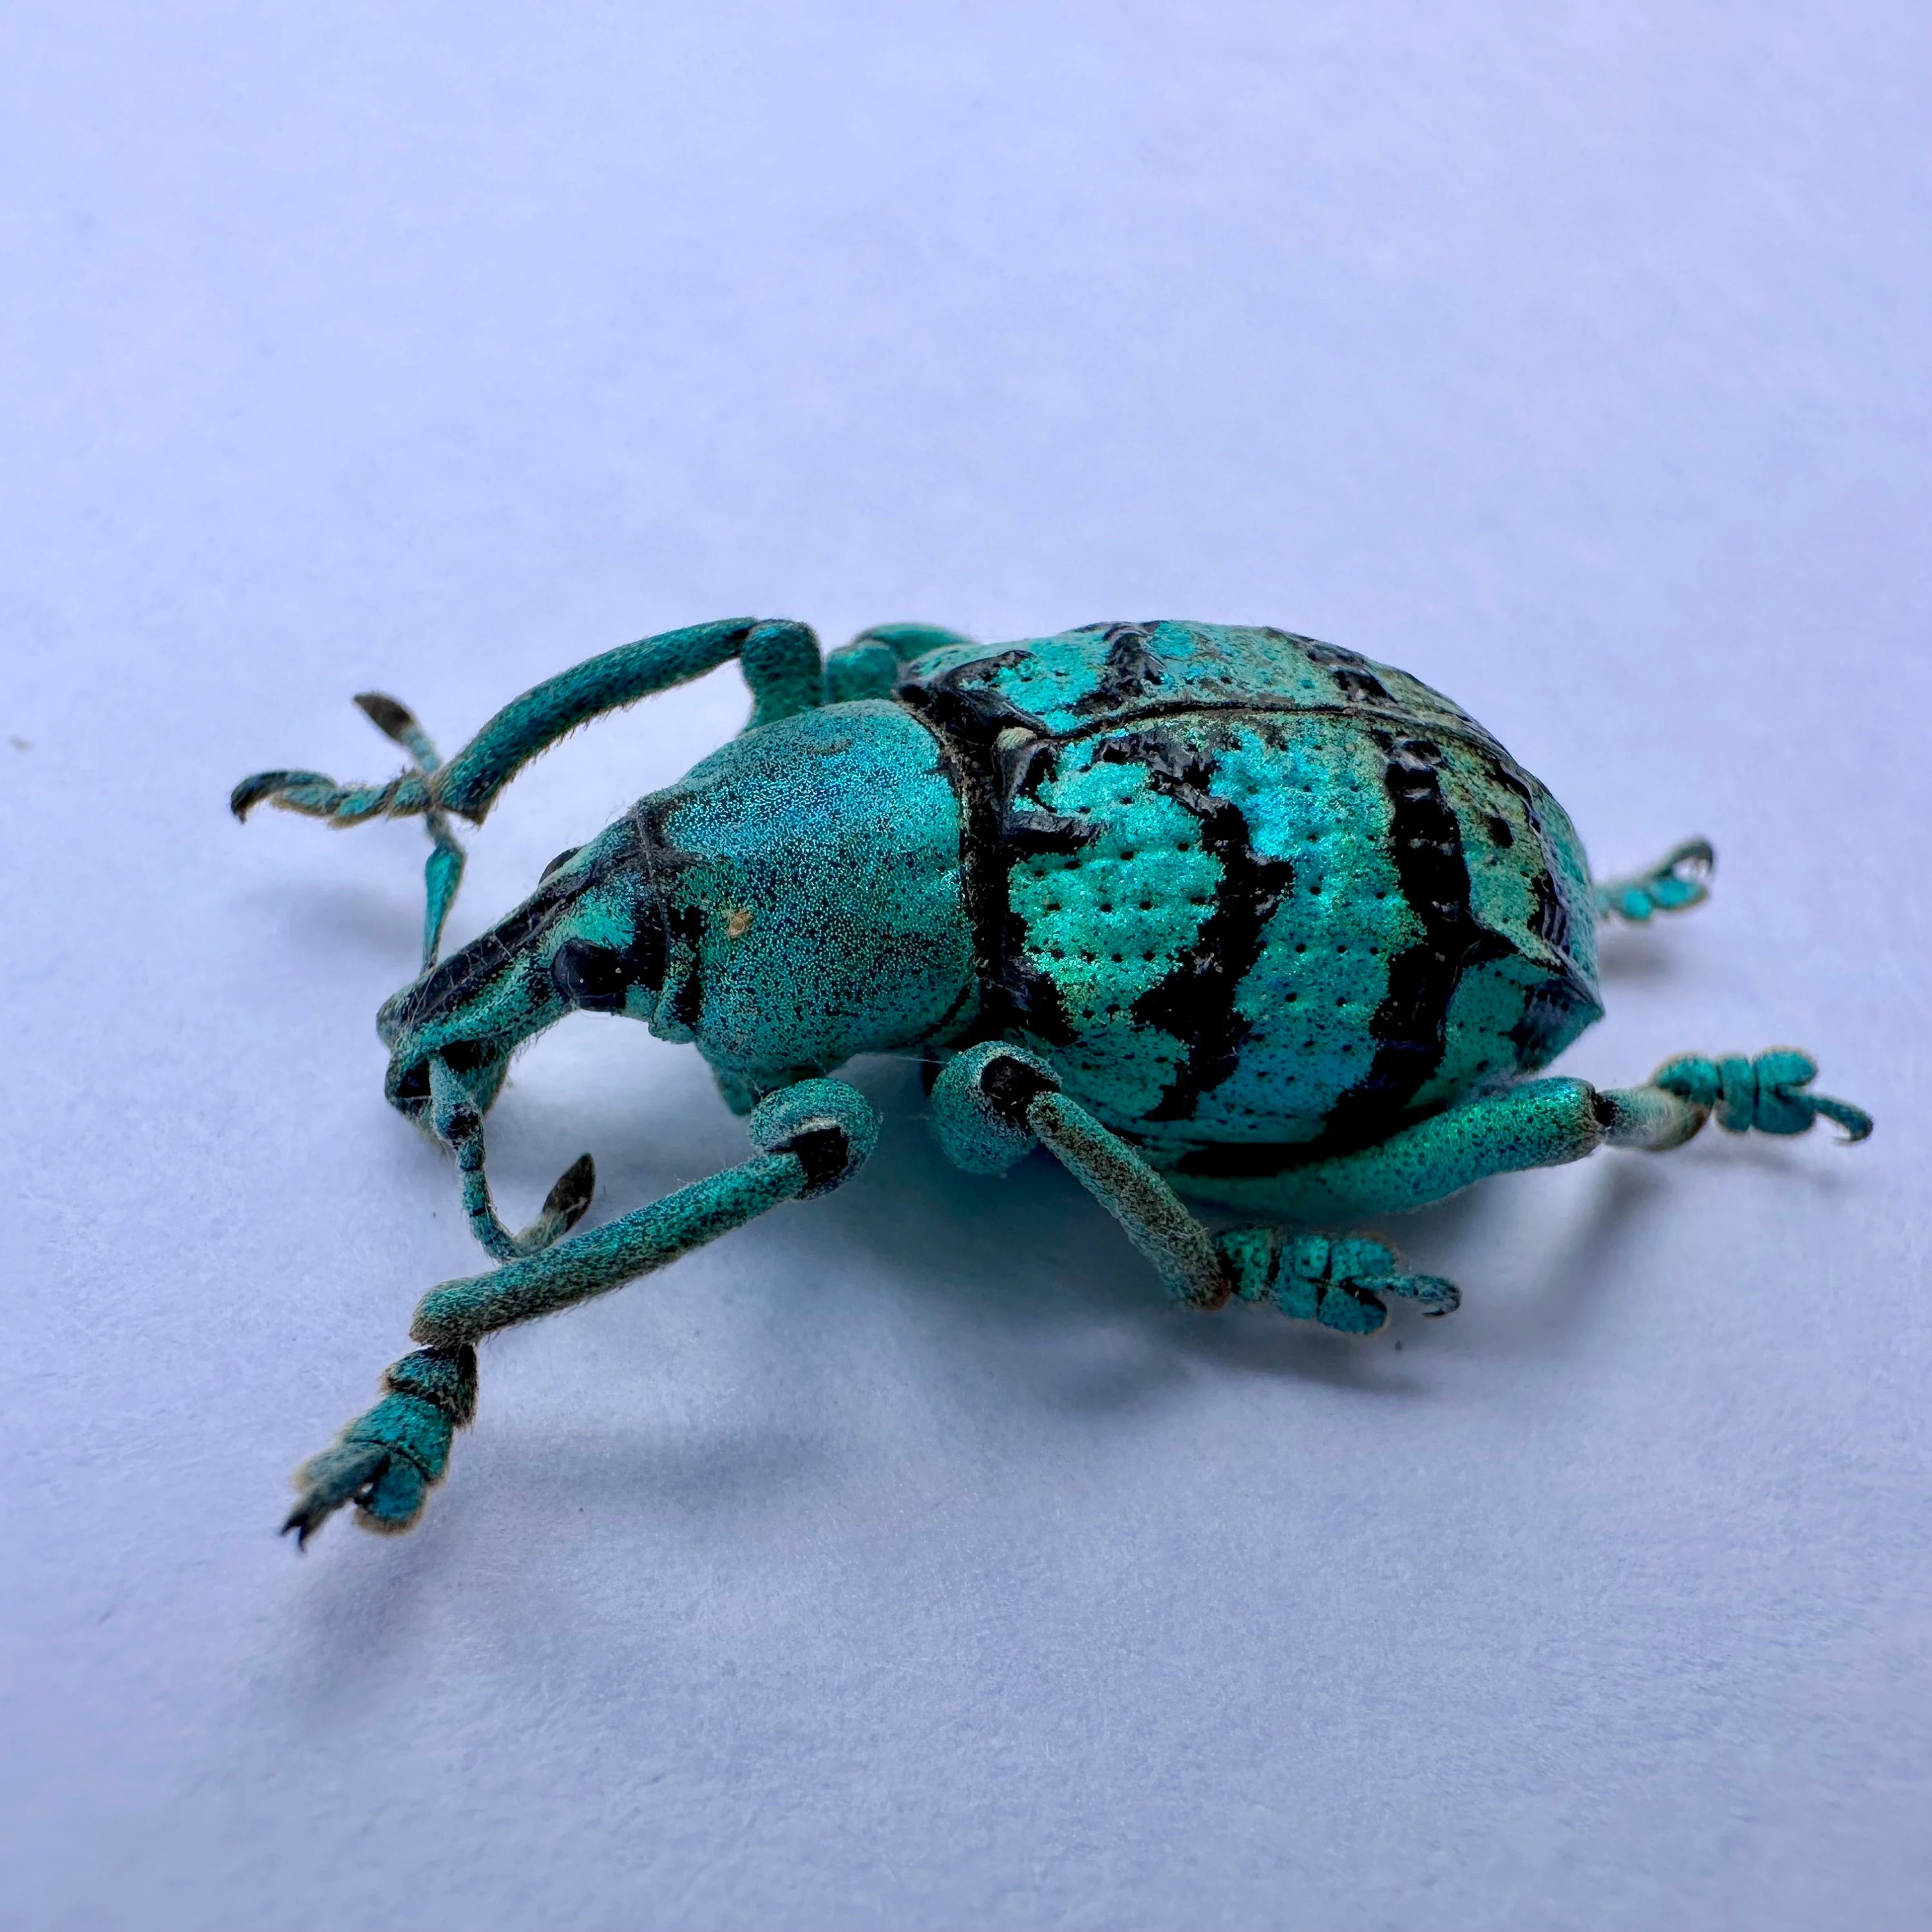 Blue/Green Weevil Beetle 'Eupholus chevrolati'